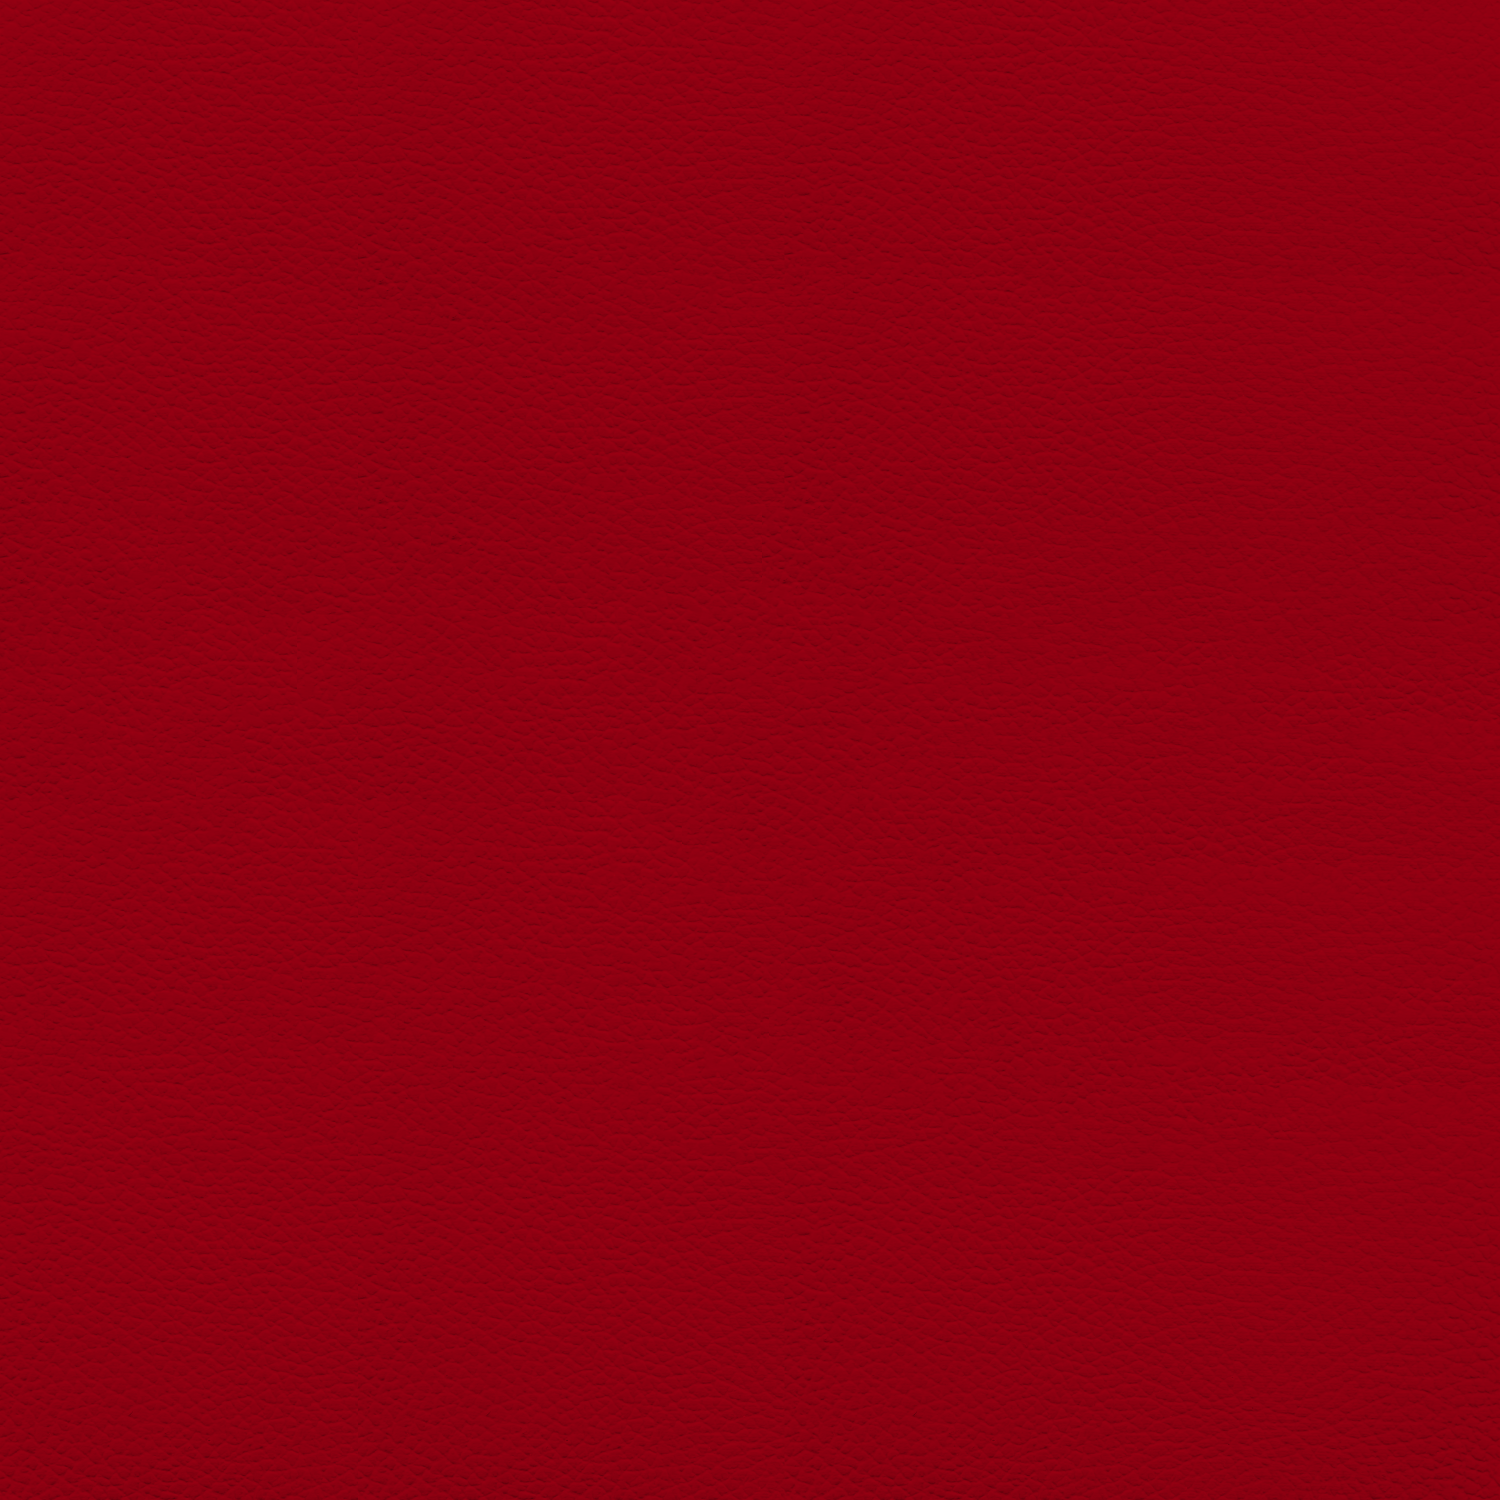 071-rojo-dupsa-escarlata-4bs-03